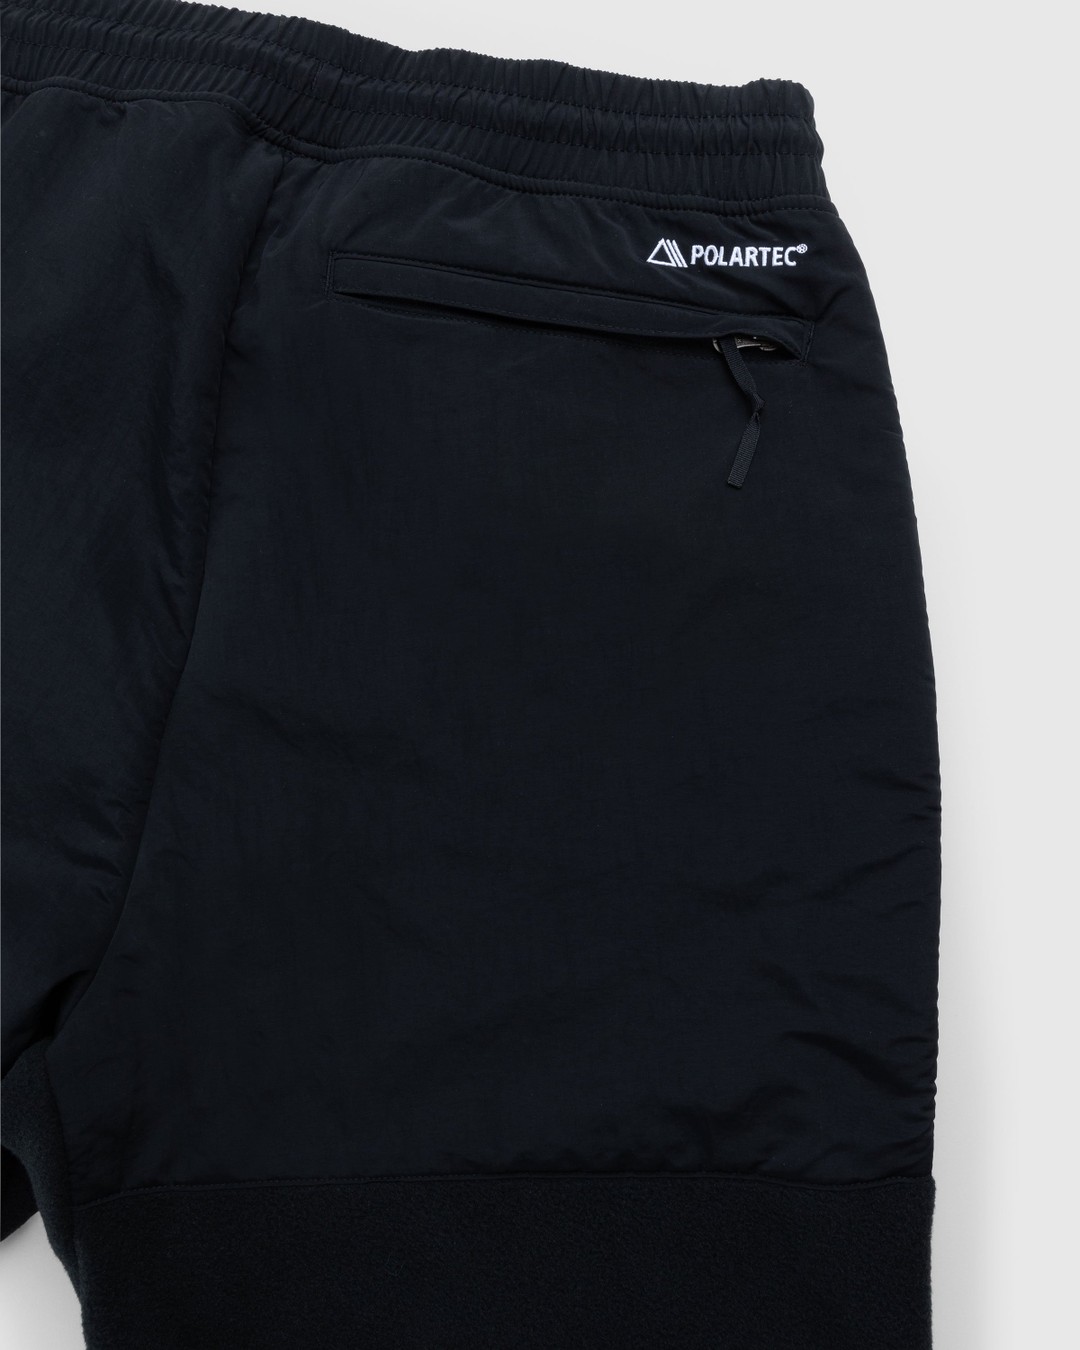 The North Face – Denali Pant Black - Active Pants - Black - Image 3